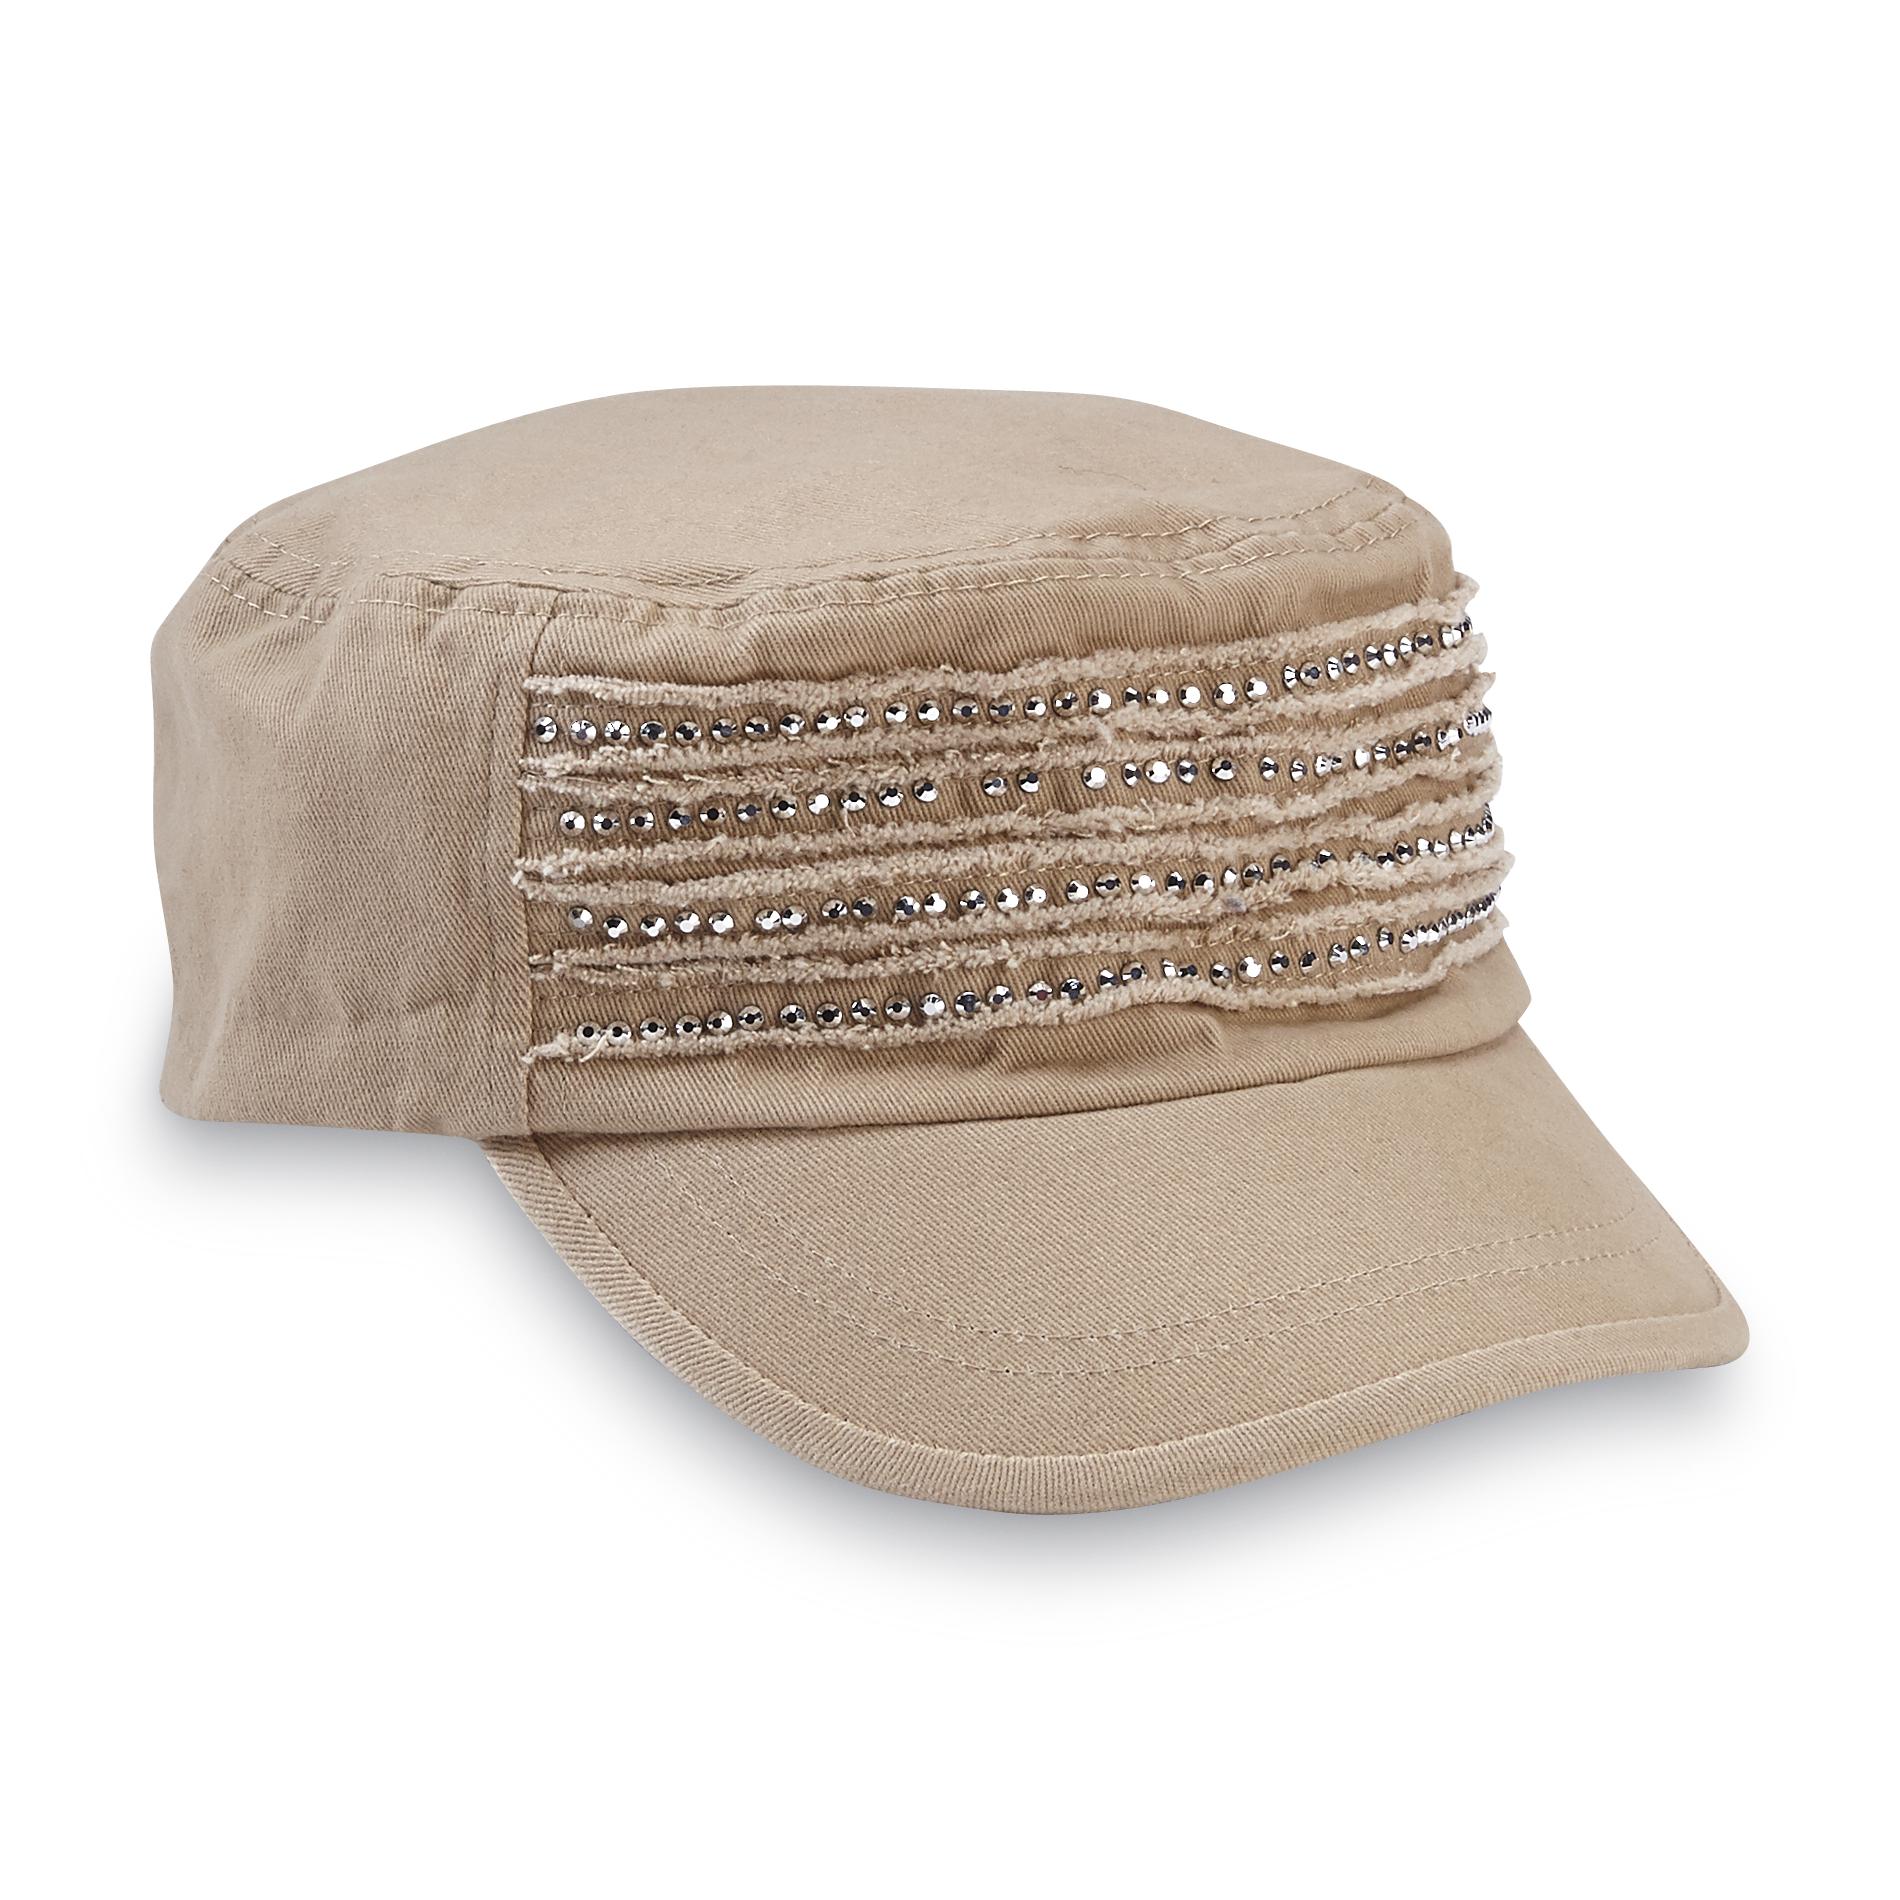 Joe Boxer Women's Embellished Military Hat